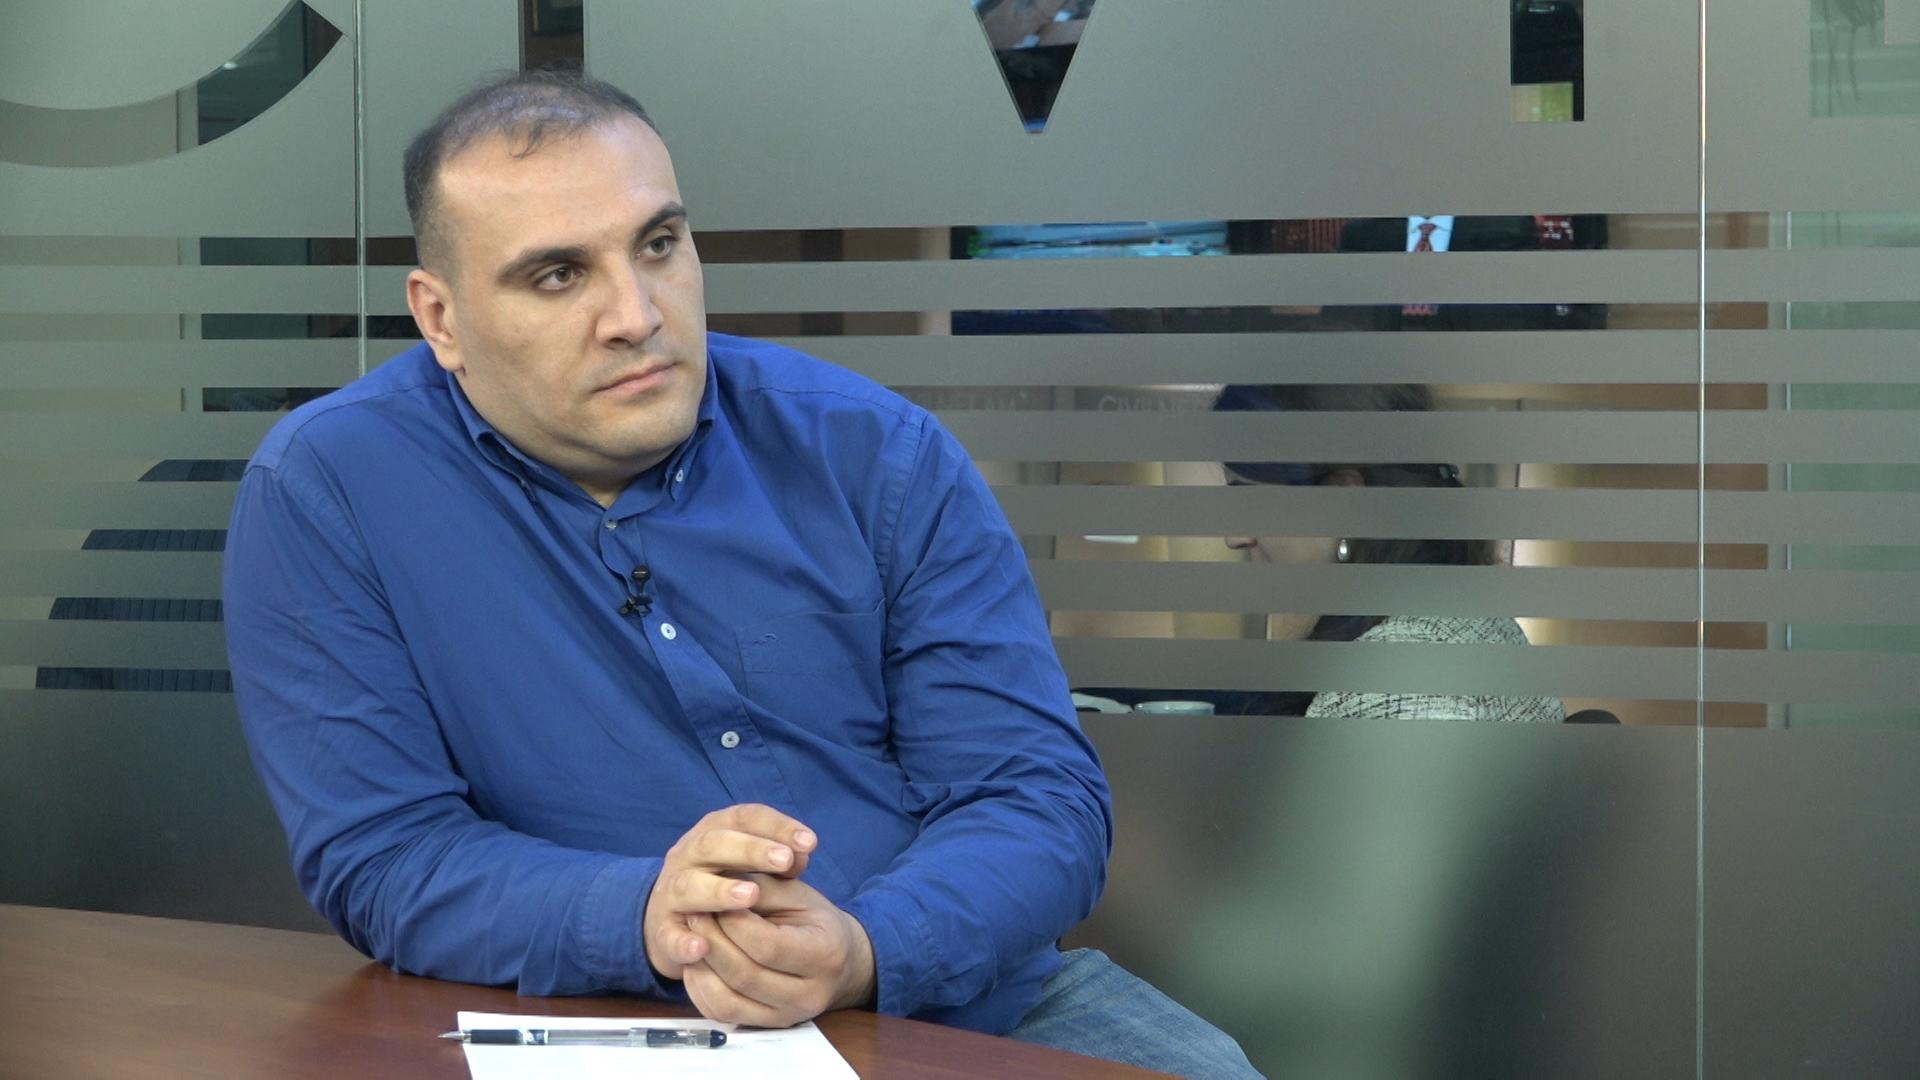 The stumbling blocks behind concessions: Hamazasp Danielyan